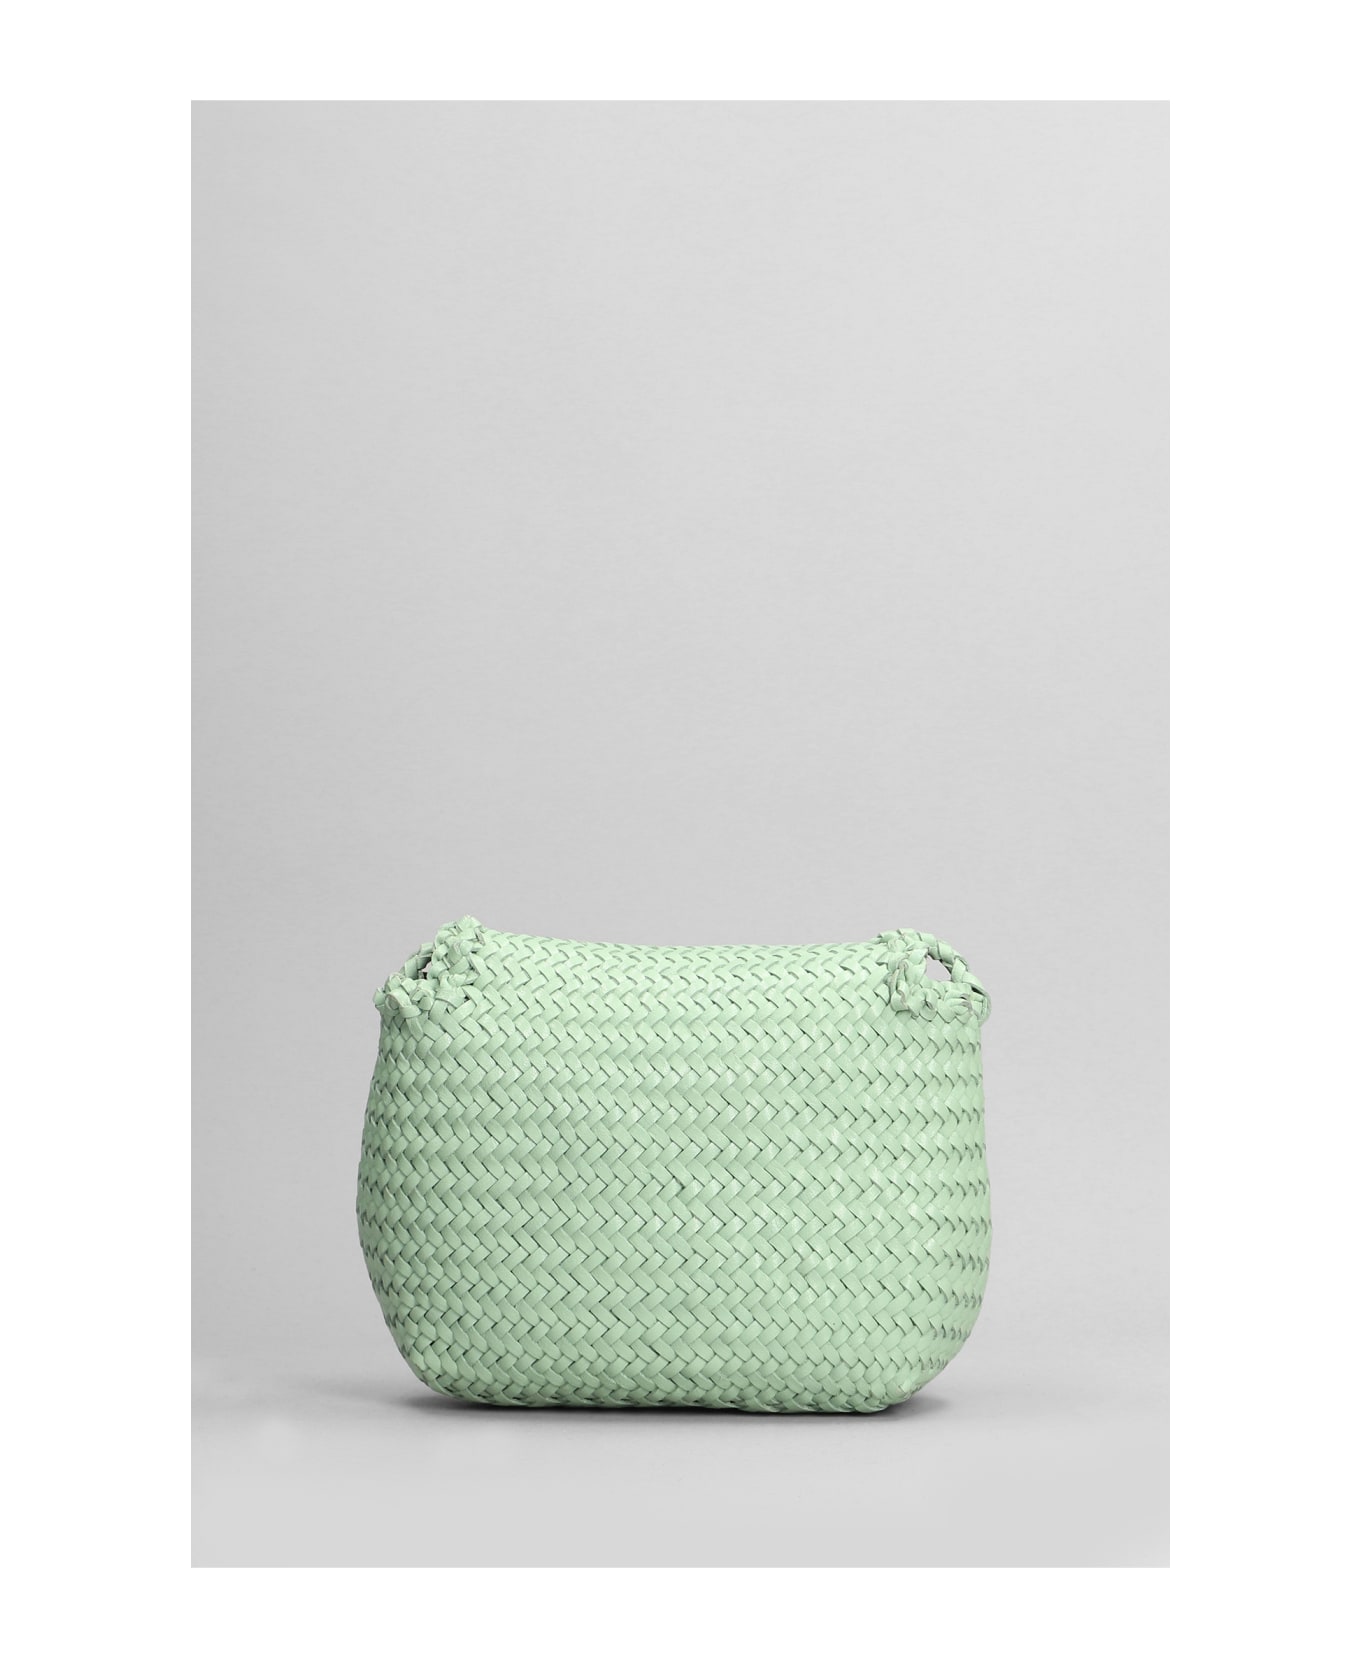 Dragon Diffusion Mini City Shoulder Bag In Green Leather - green